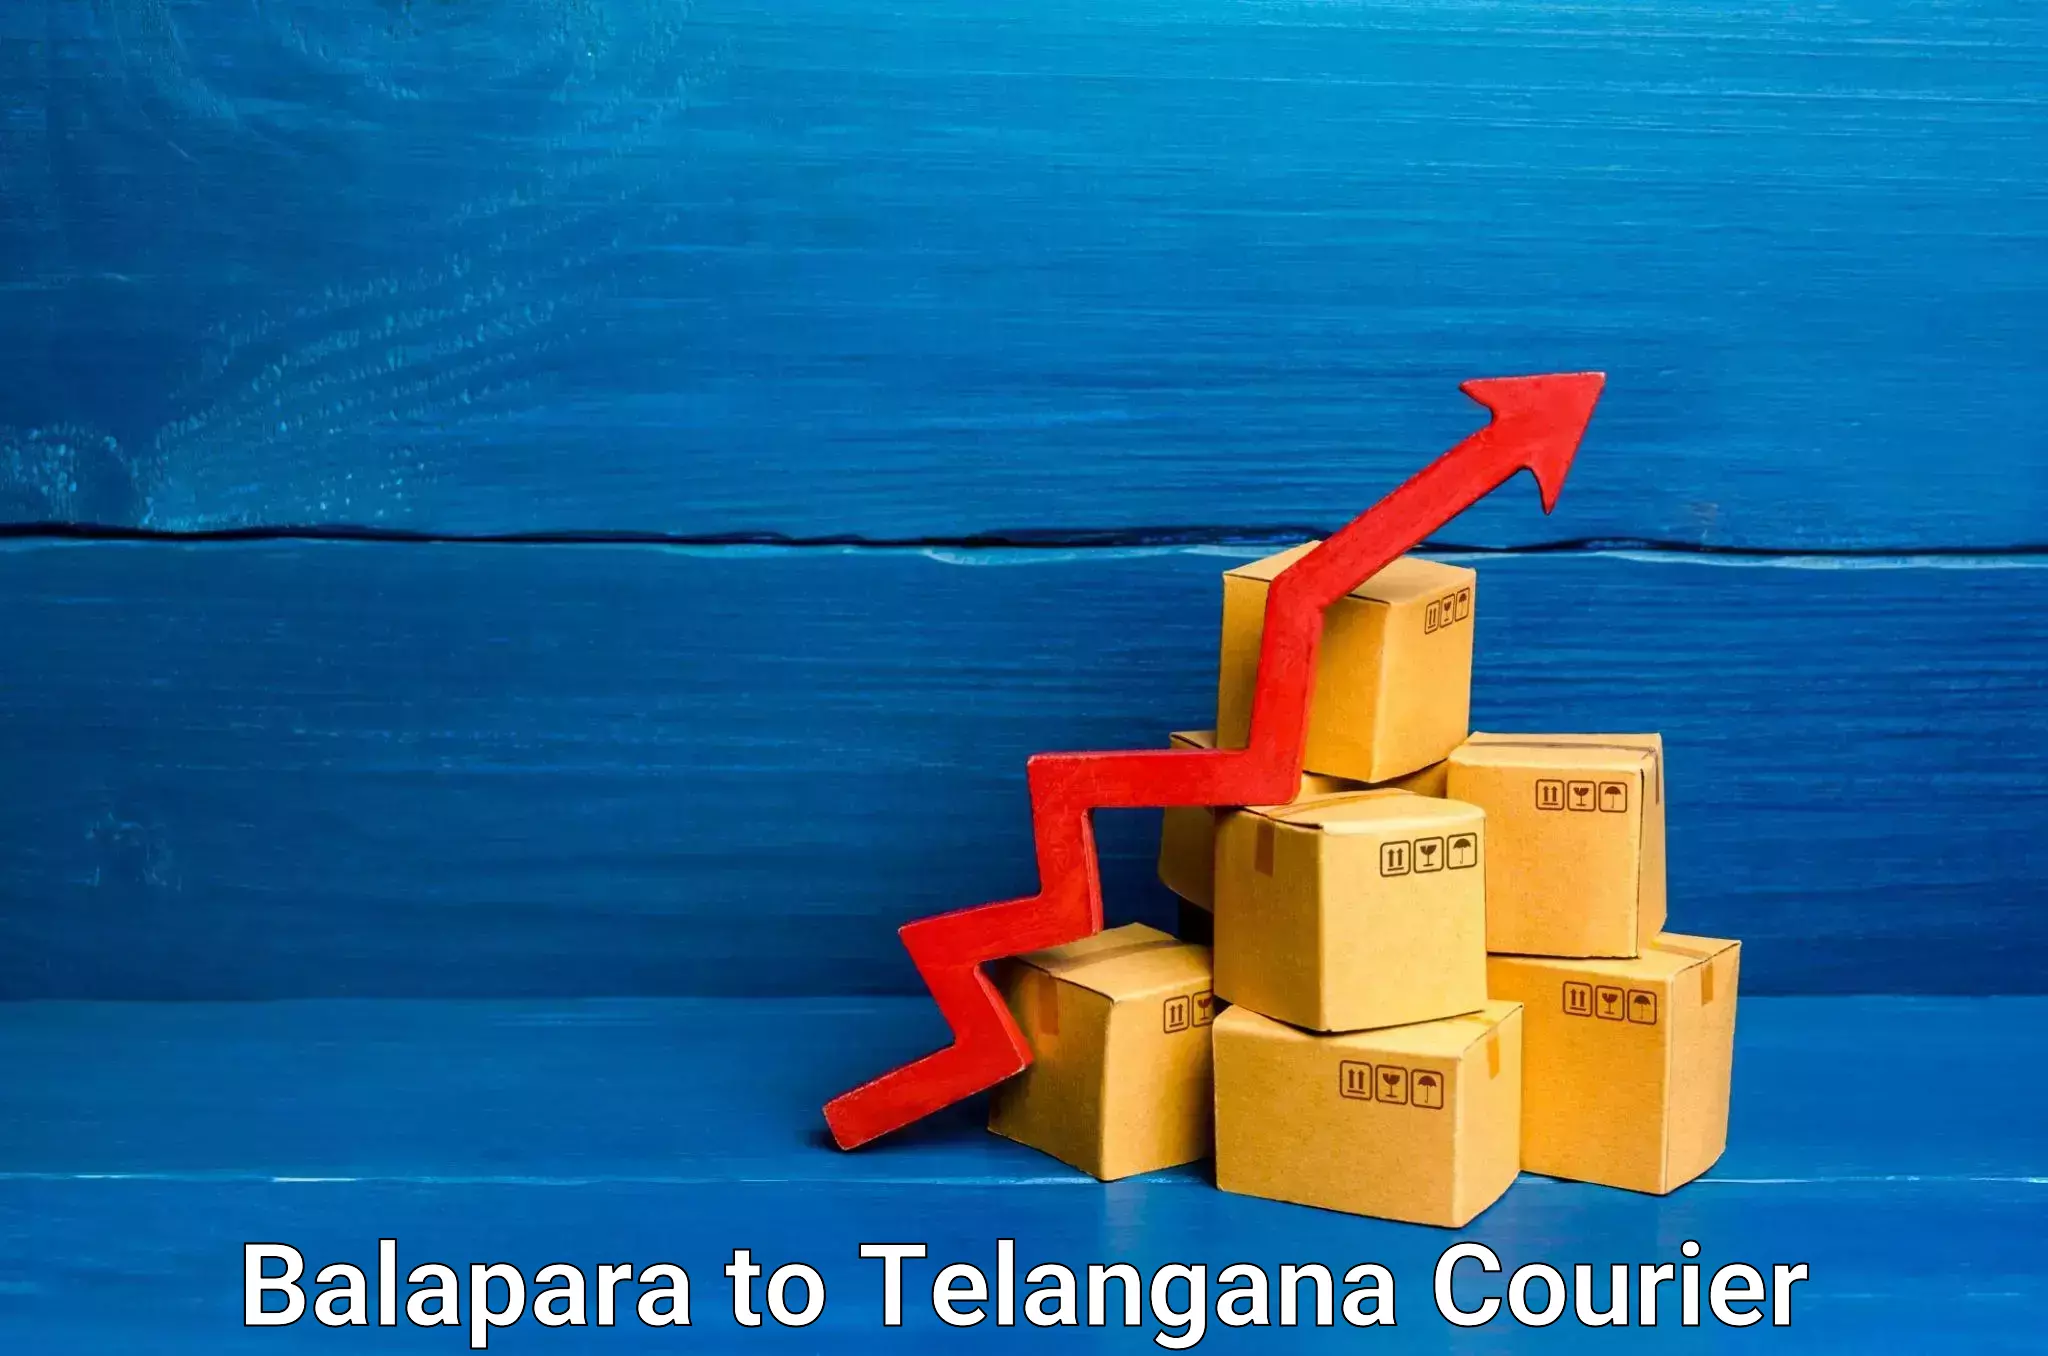 Efficient cargo handling Balapara to Hyderabad